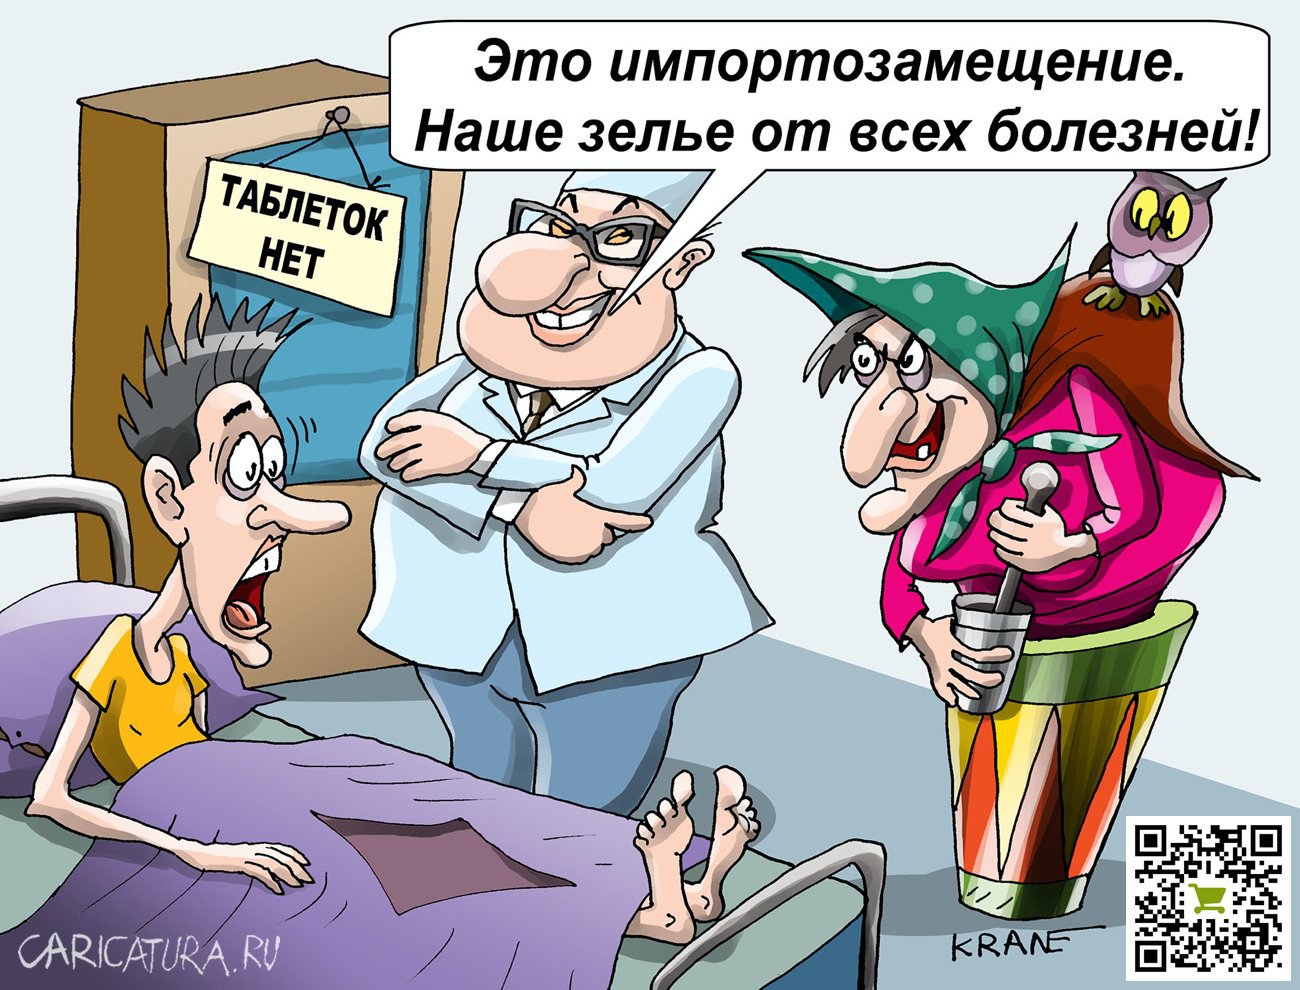 Карикатура "После приёма пищи", Евгений Кран